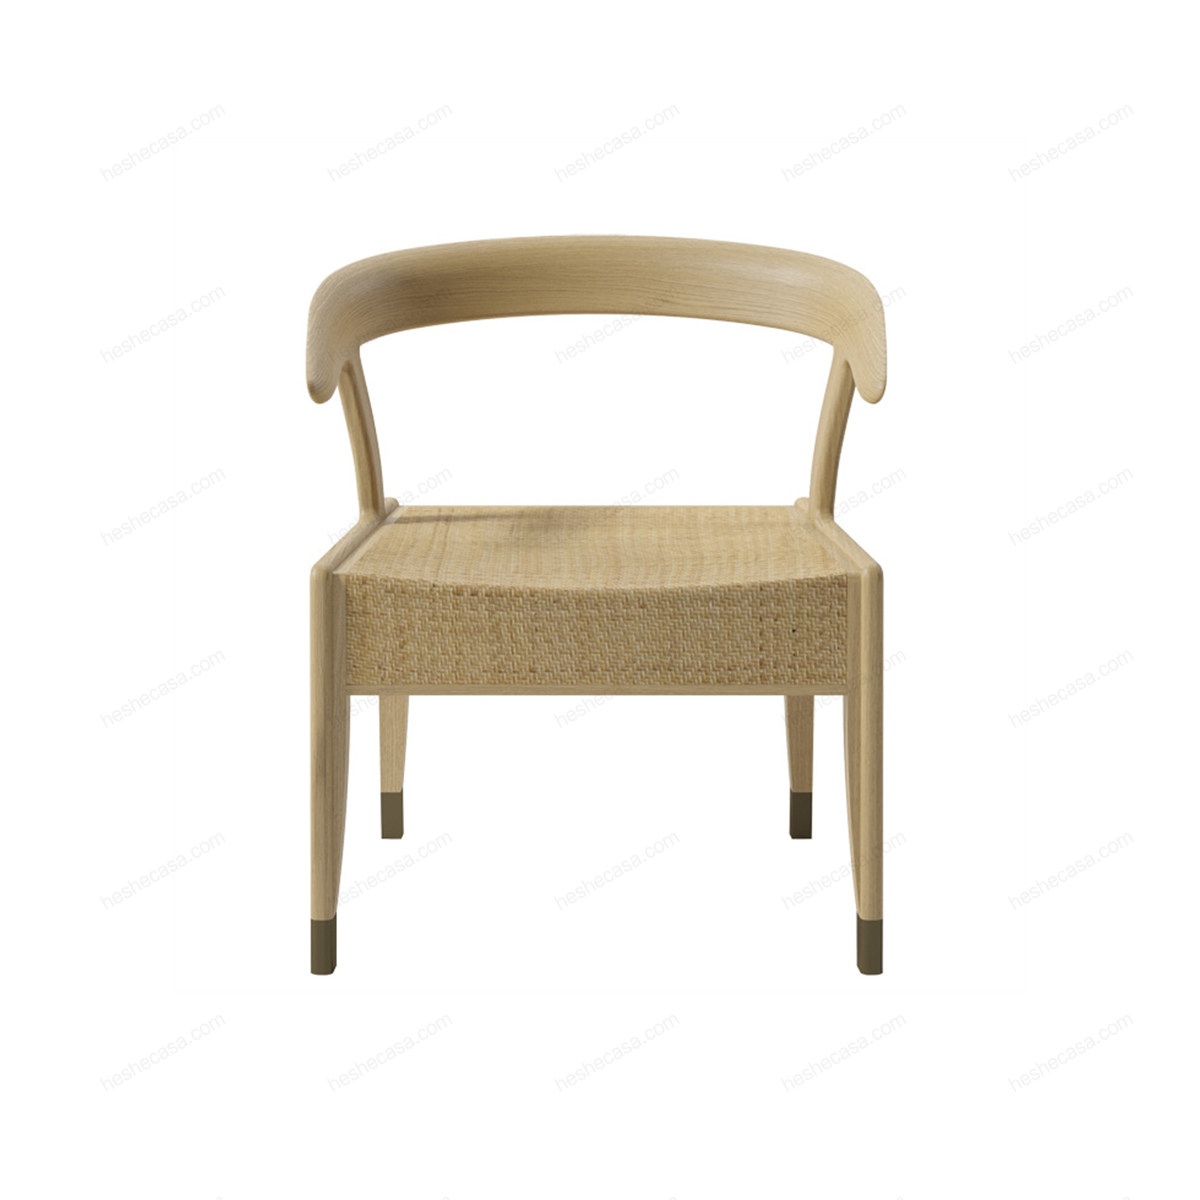 tora-low-armchair扶手椅